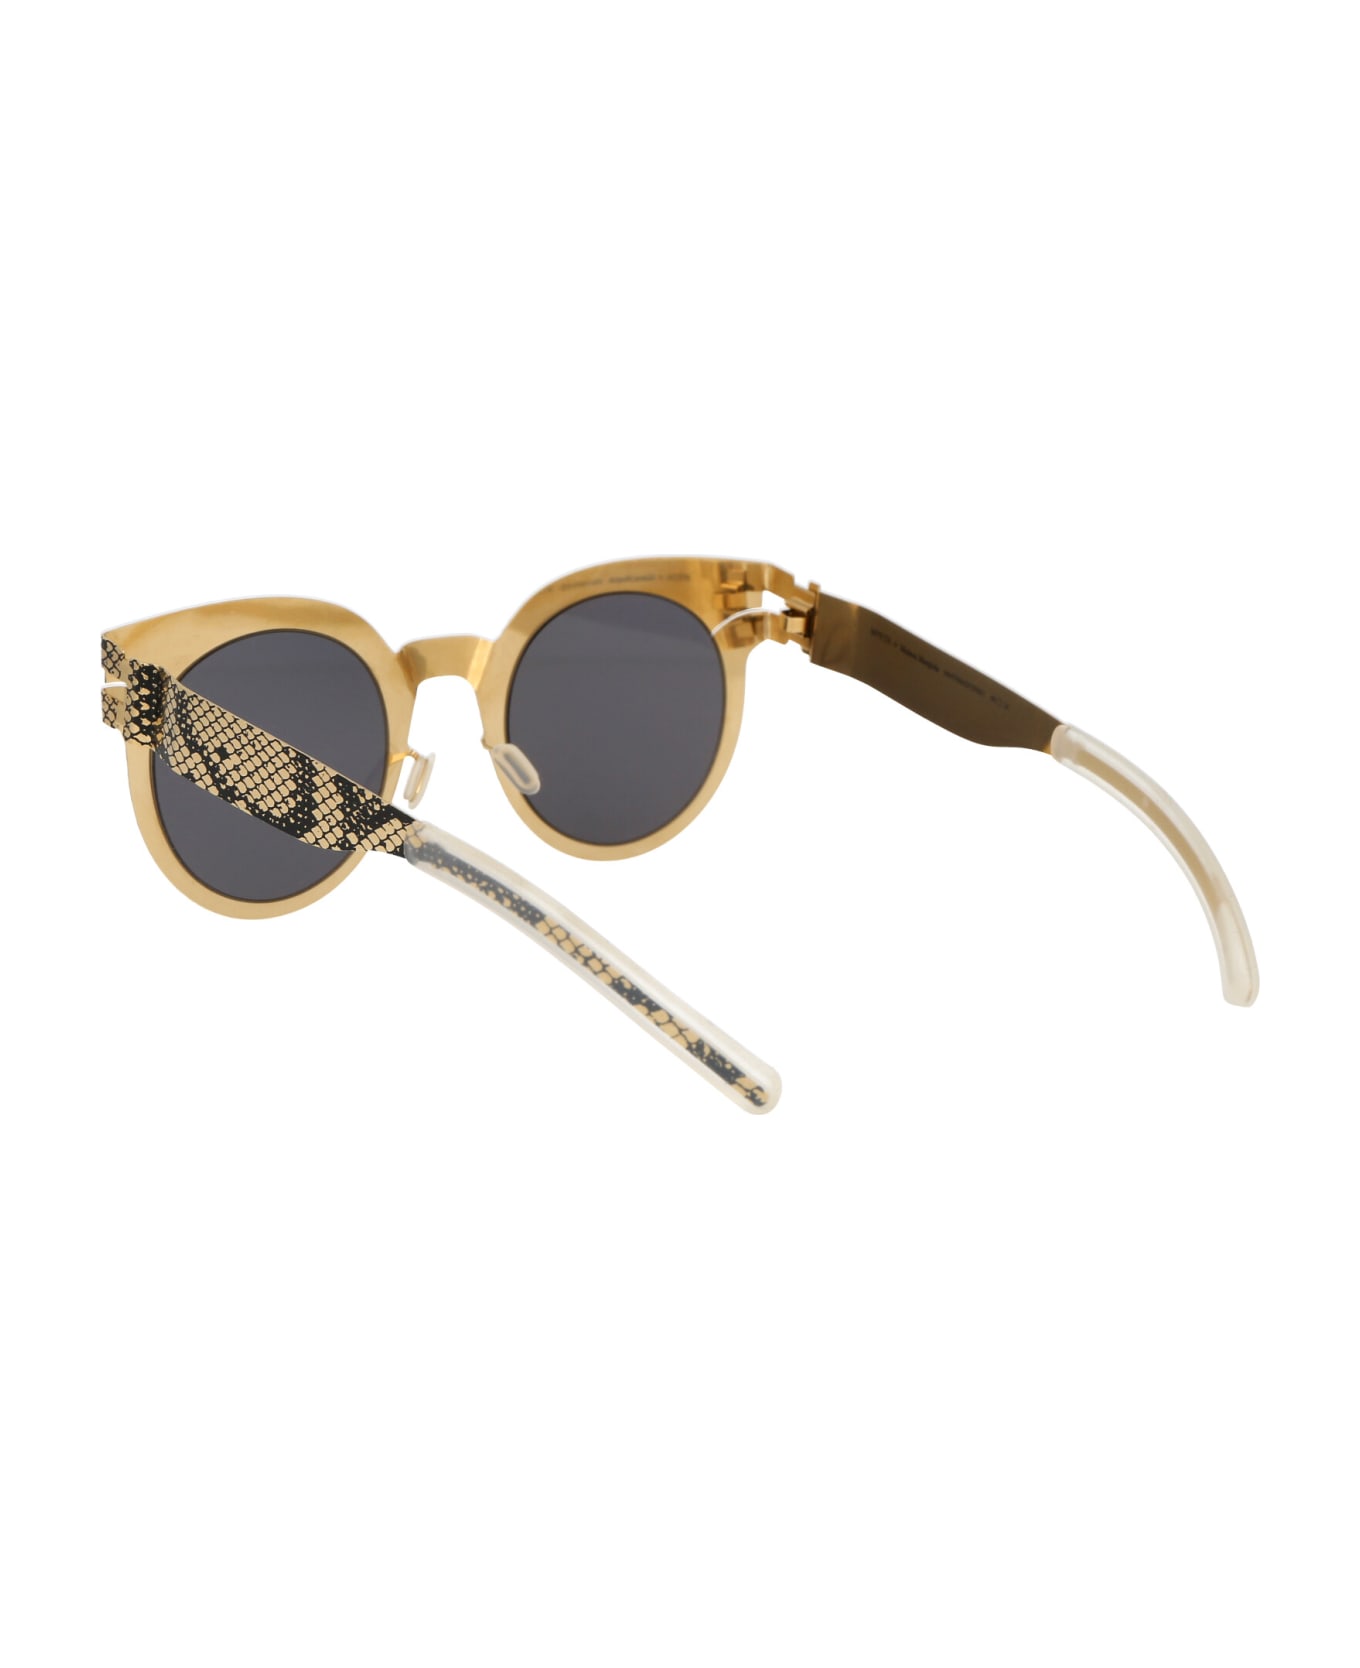 Mykita Mmtransfer001 Sunglasses - 239 Gold Black Python Dark Grey Solid